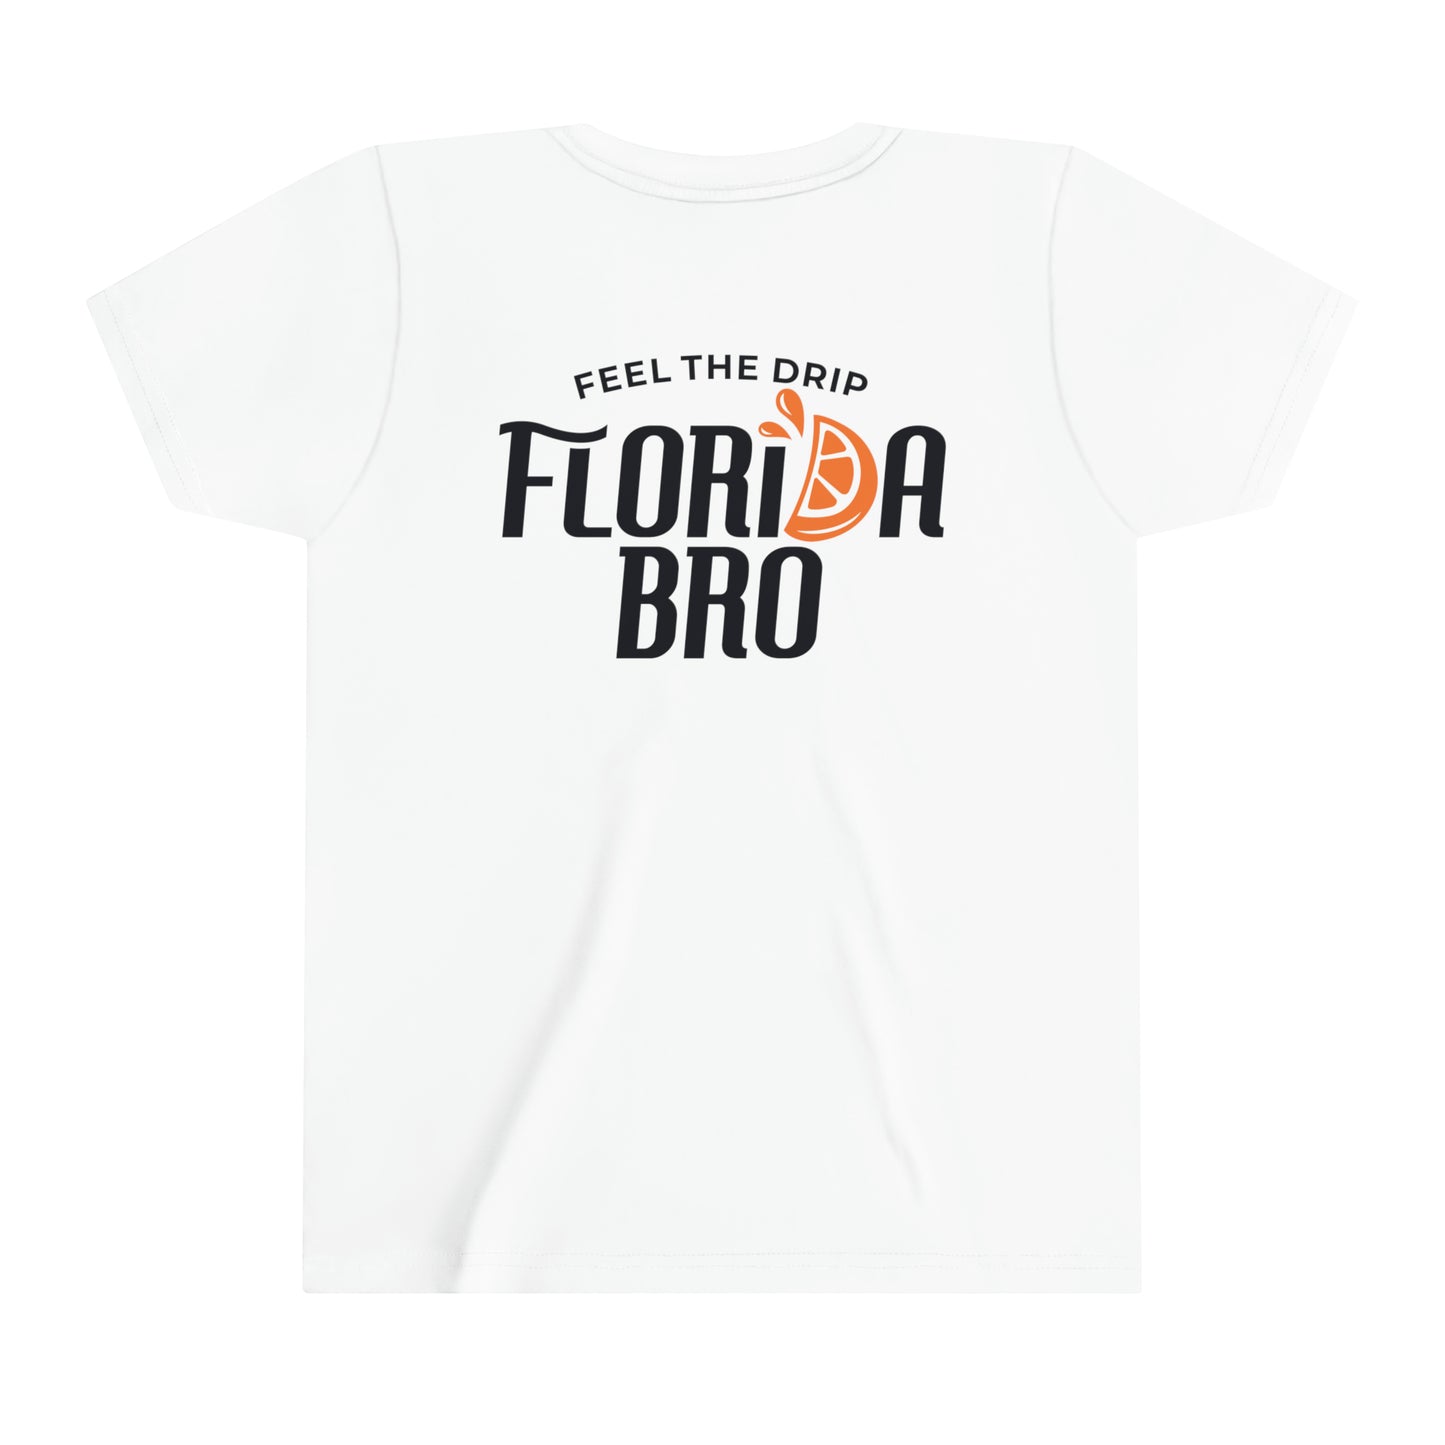 FLORIDA BRO - Short Sleeve Florida Beach Tee - Youth Sizes